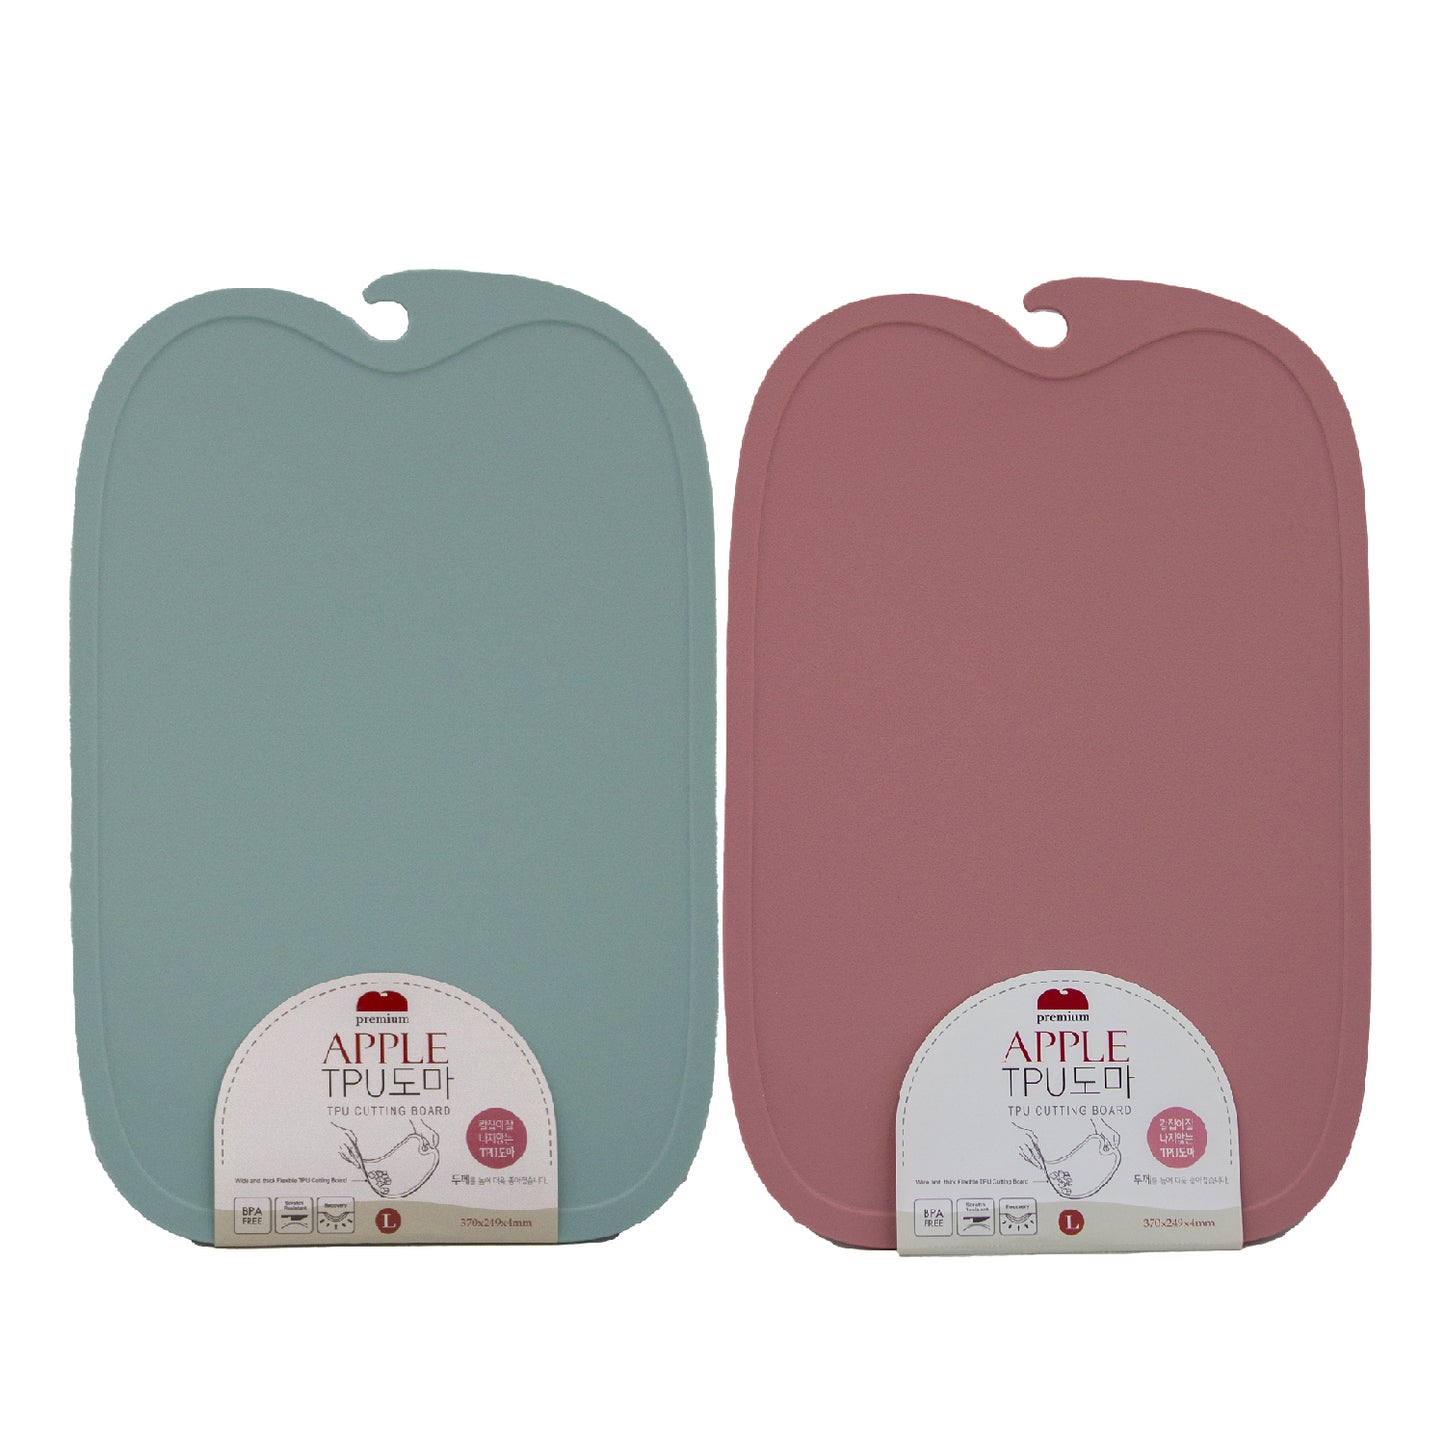 Apple TPU Cutting Board Large - Pink/Mint